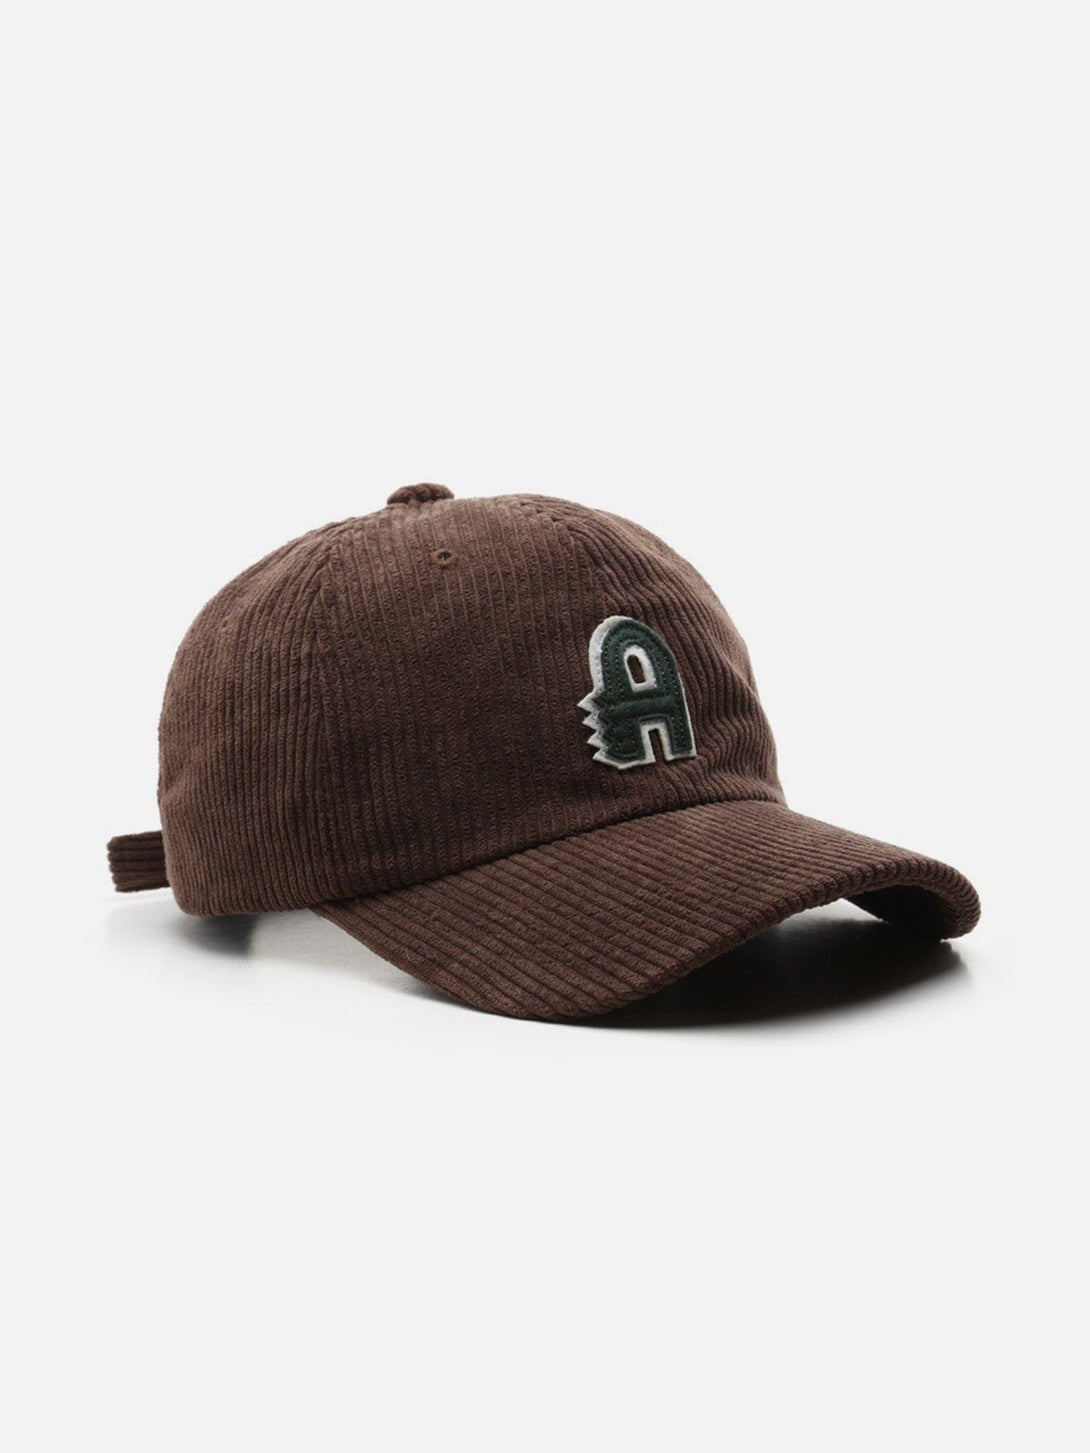 Levefly - Alphabet Patchwork Hat - Streetwear Fashion - levefly.com